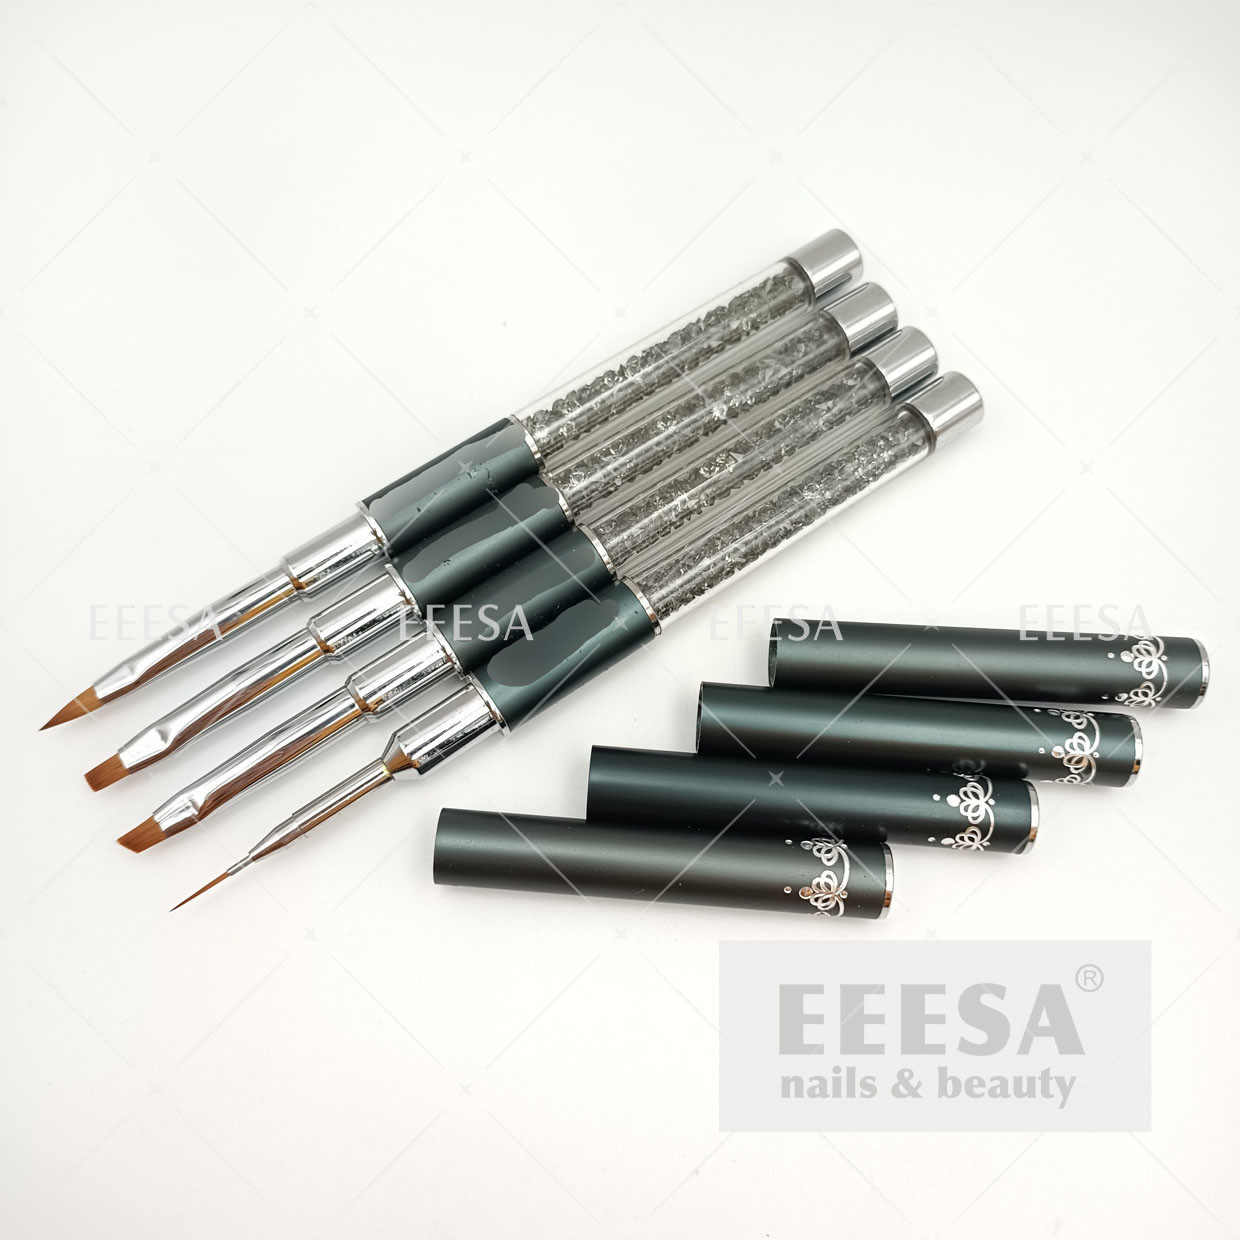 Buy cheap Grey rhinestone crystal metal handle 3D gel liner nail art brush sets product